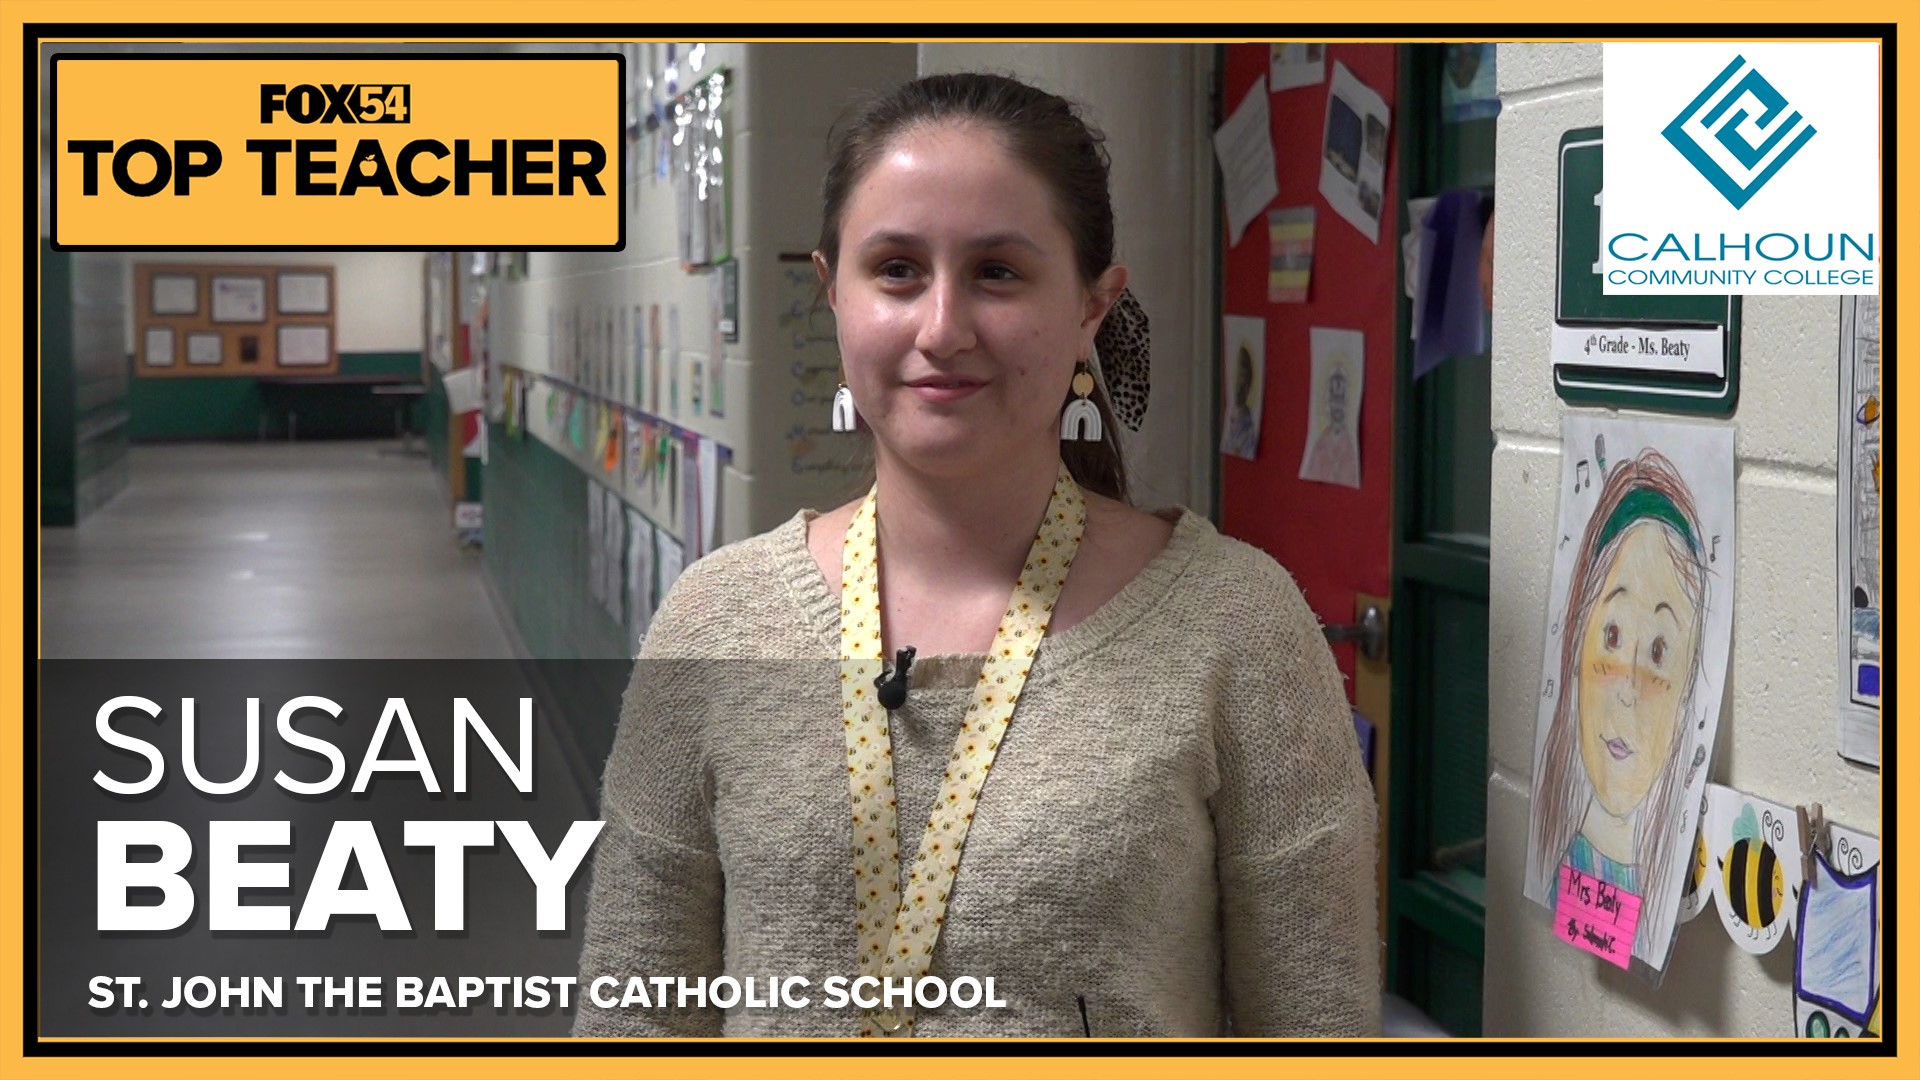 Meet FOX54 Top Teacher Susan Beaty of St. John the Baptist Catholic School in Madison.